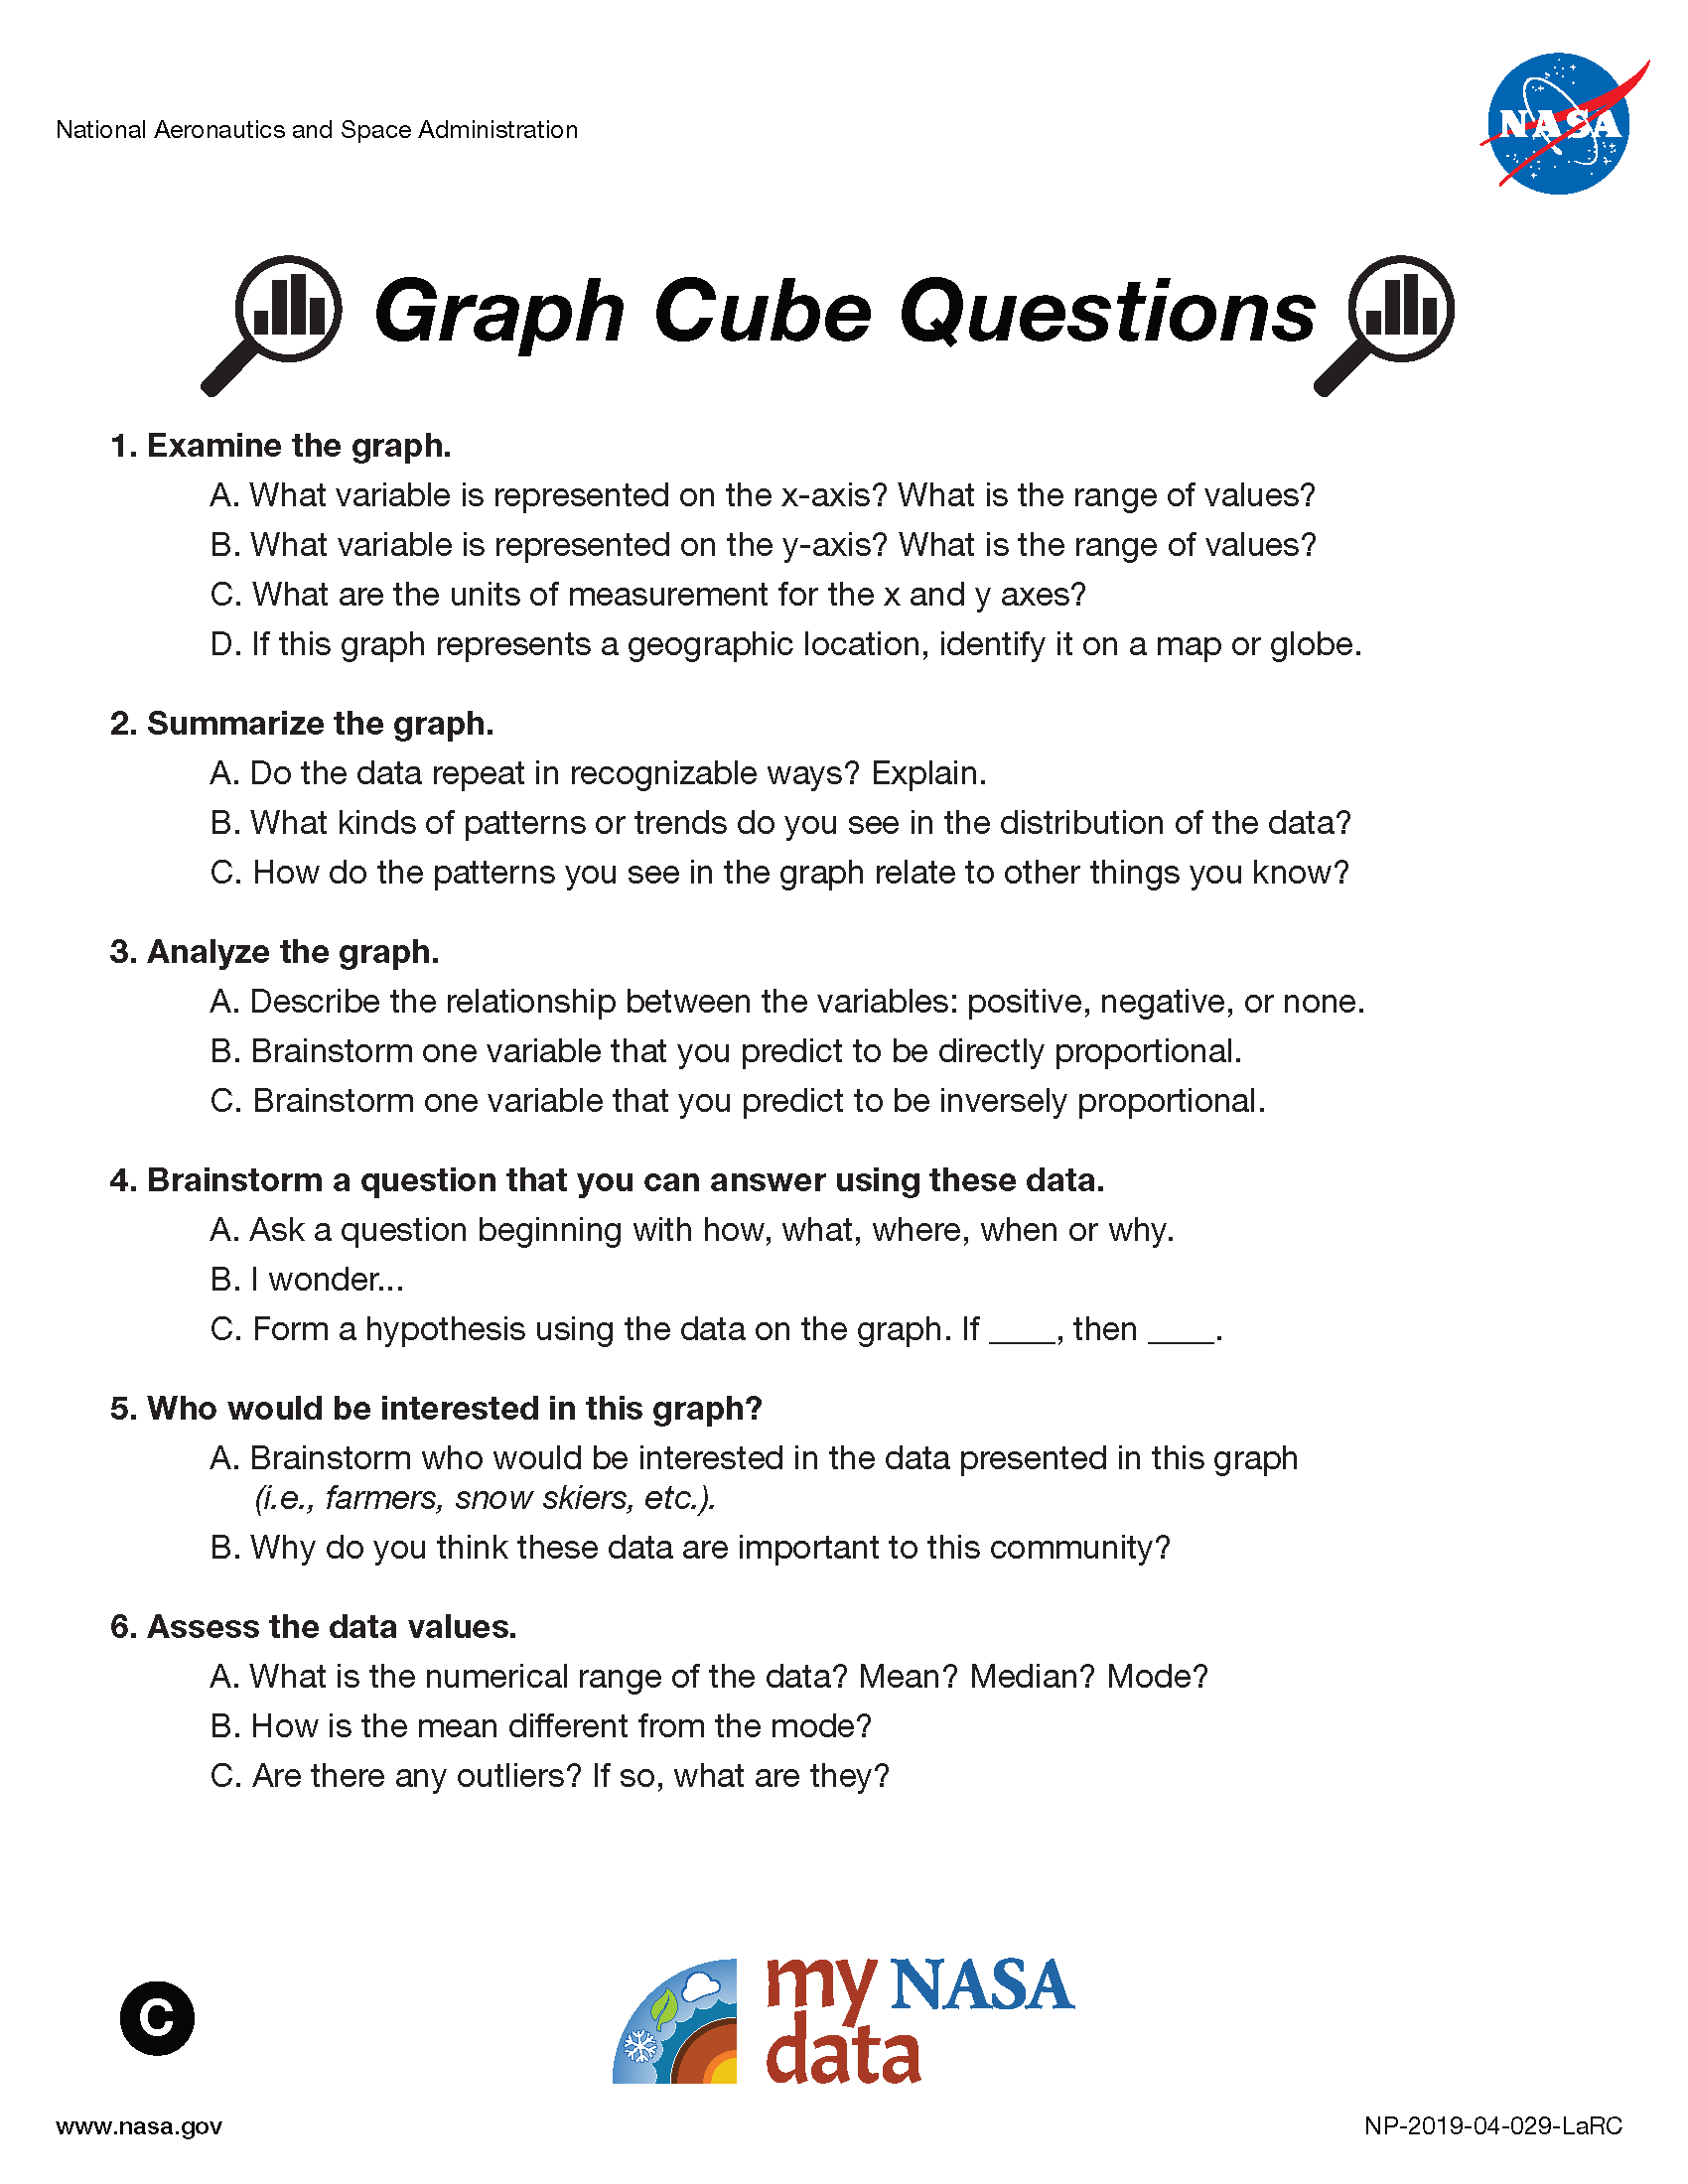 My NASA Data - Data Literacy Cubes - Graph Cube Questions - Advanced